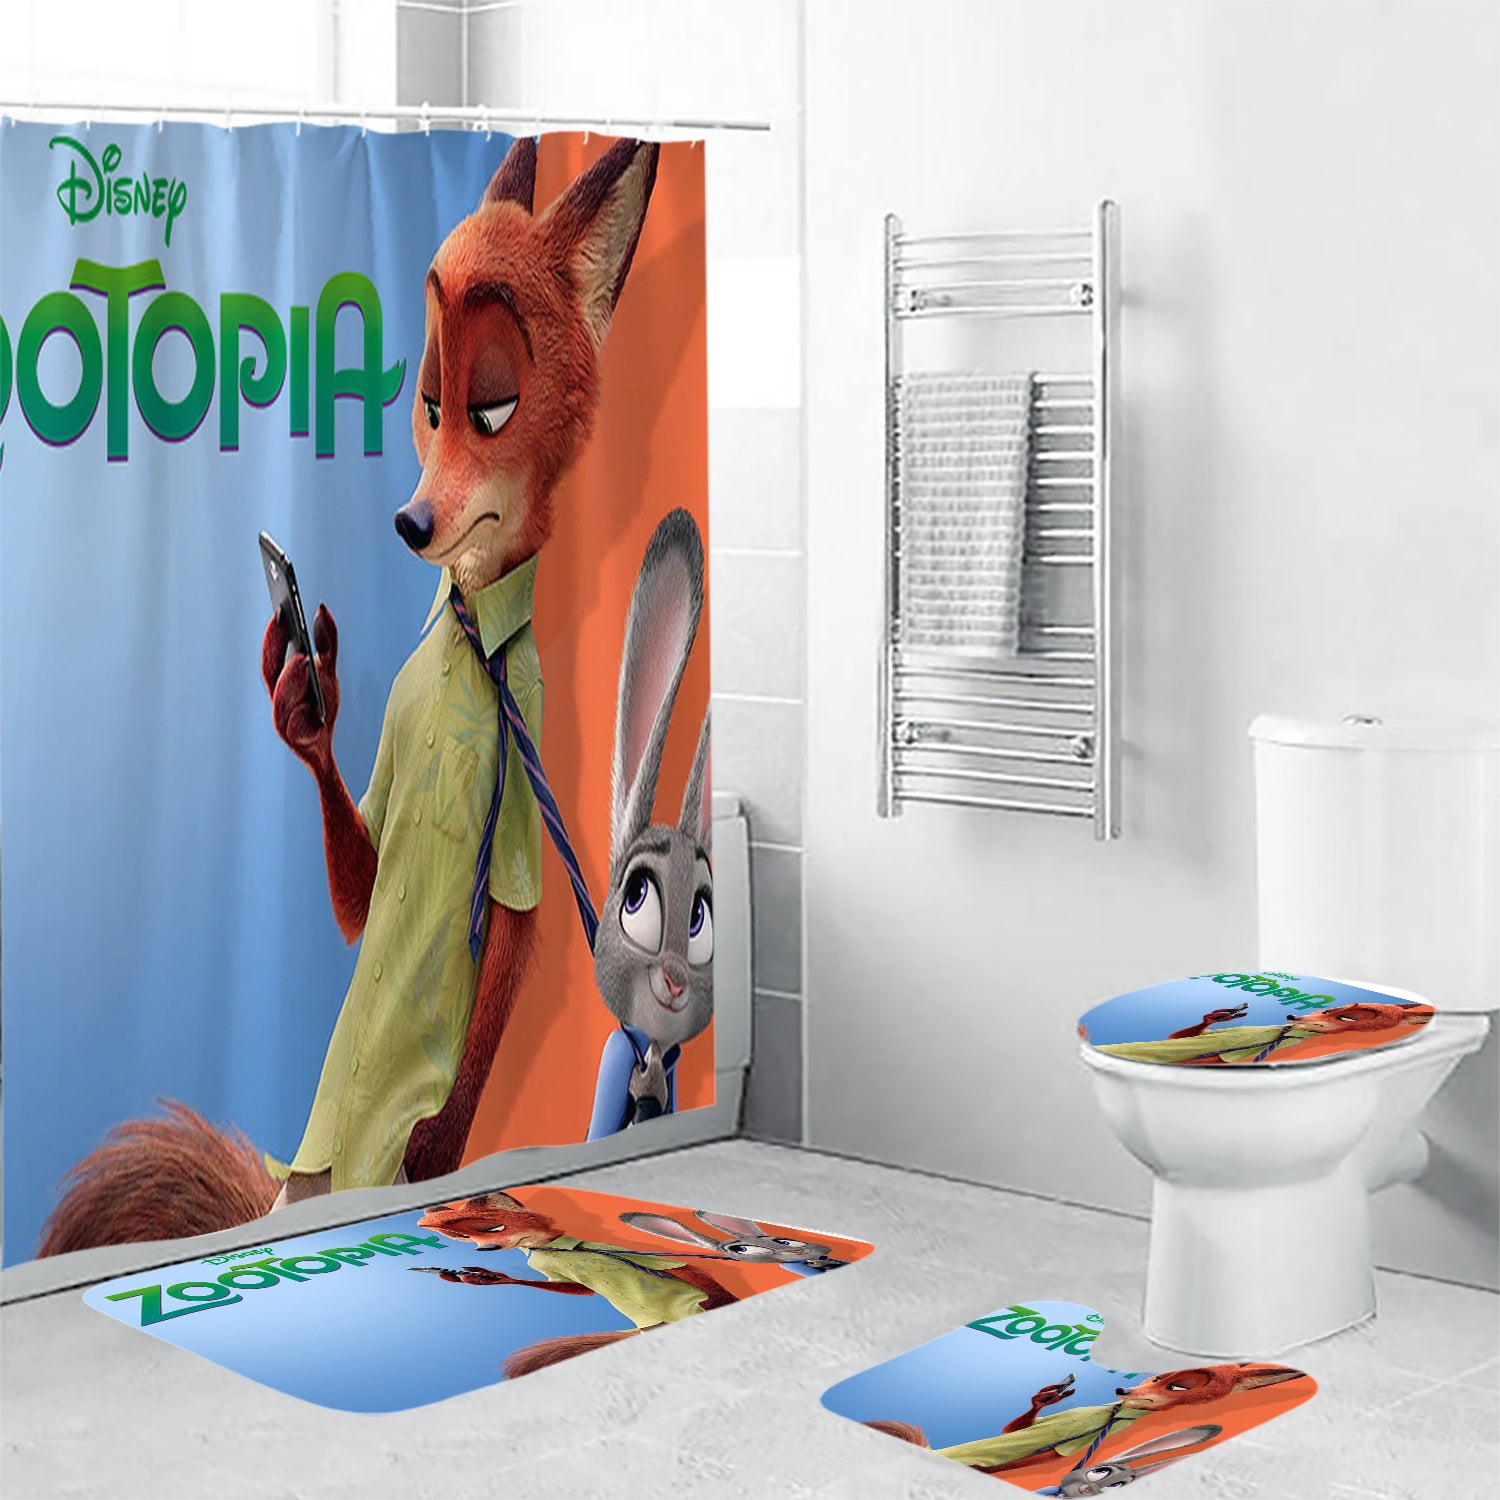 Zootopia Poster 9 Waterproof Shower Curtain Non-Slip Toilet Lid Cover Bath Mat - Bathroom Set